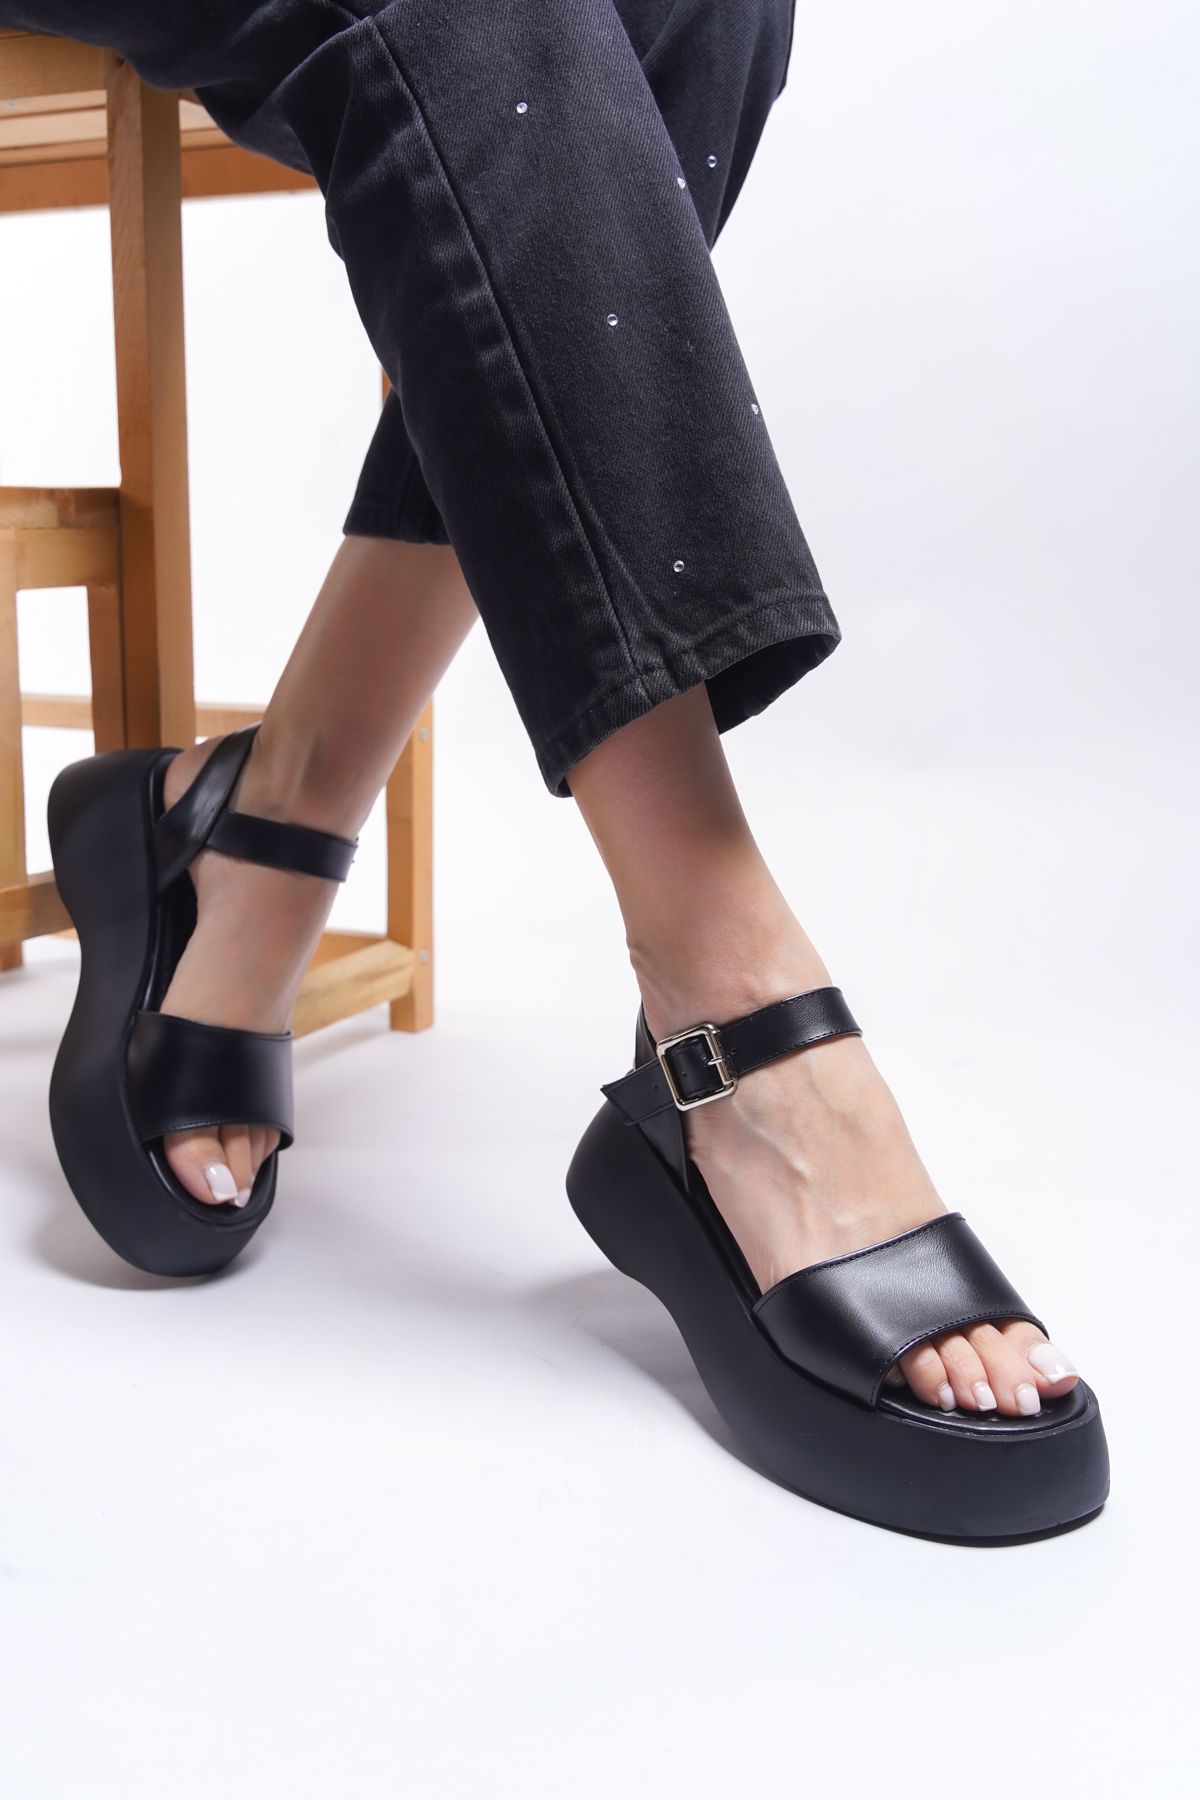 Riccon Alloshara Kadın Sandalet 0012801 Siyah Cilt